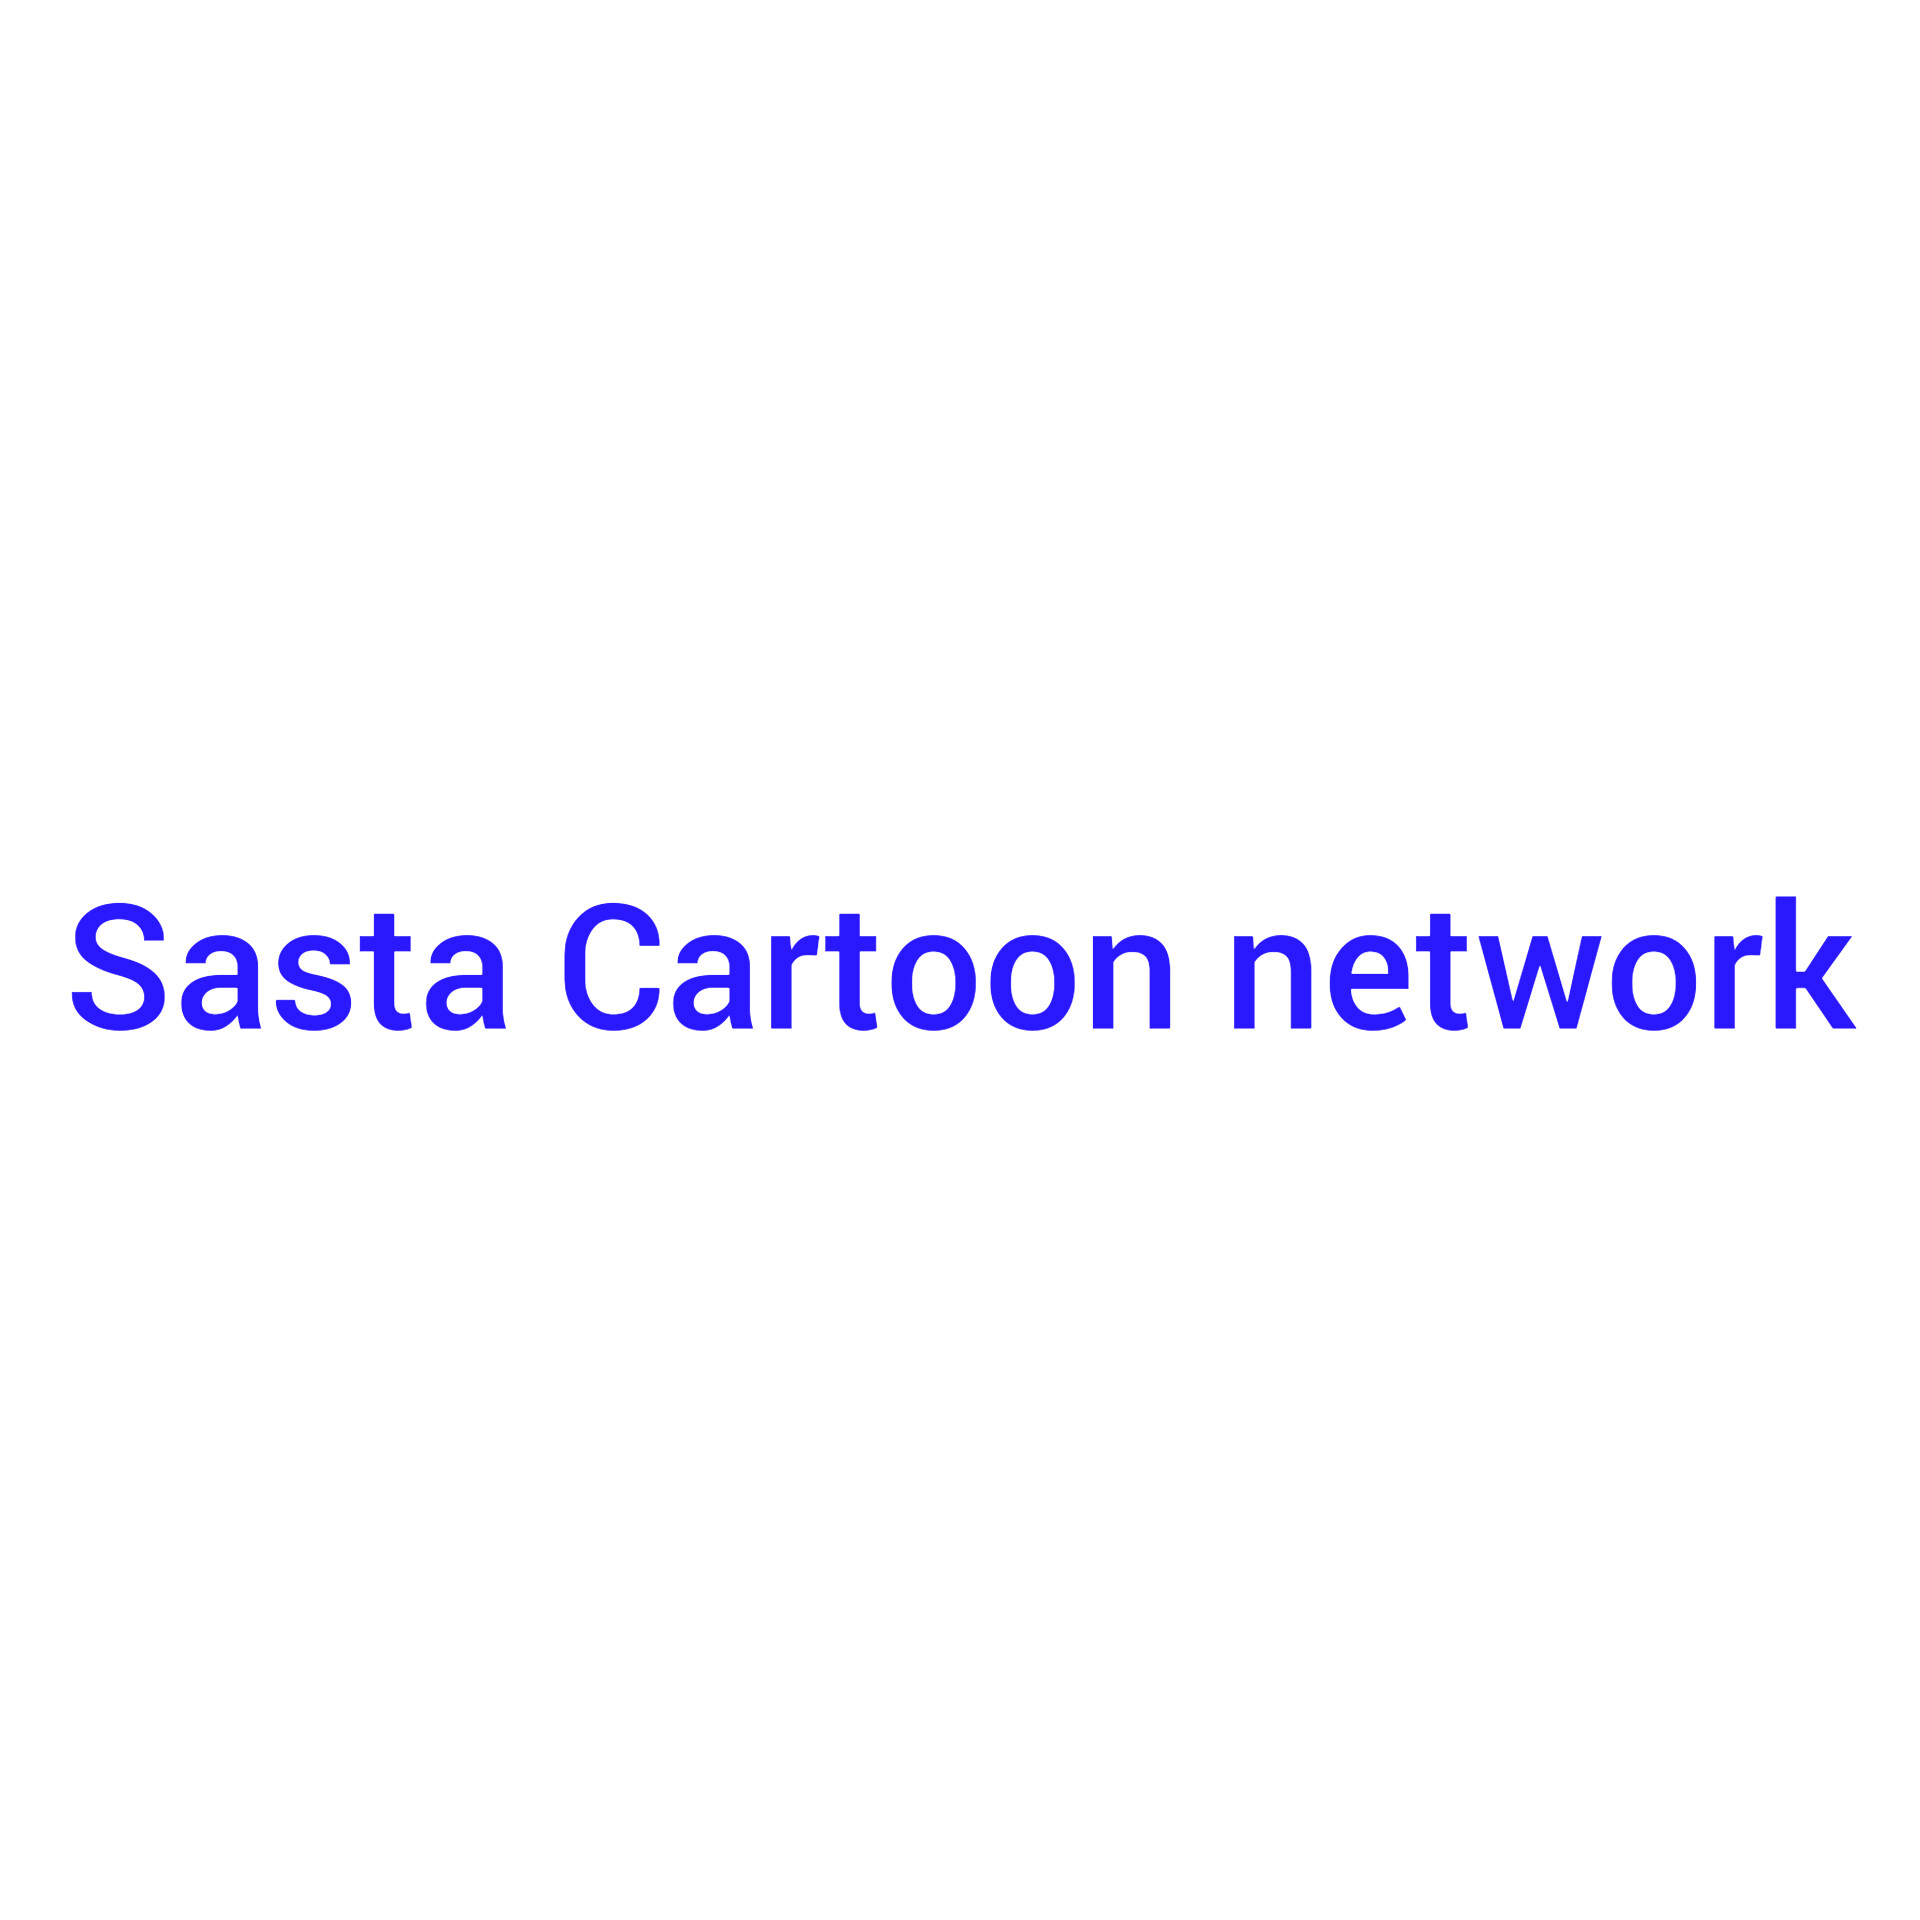 Sasta Cartoon network